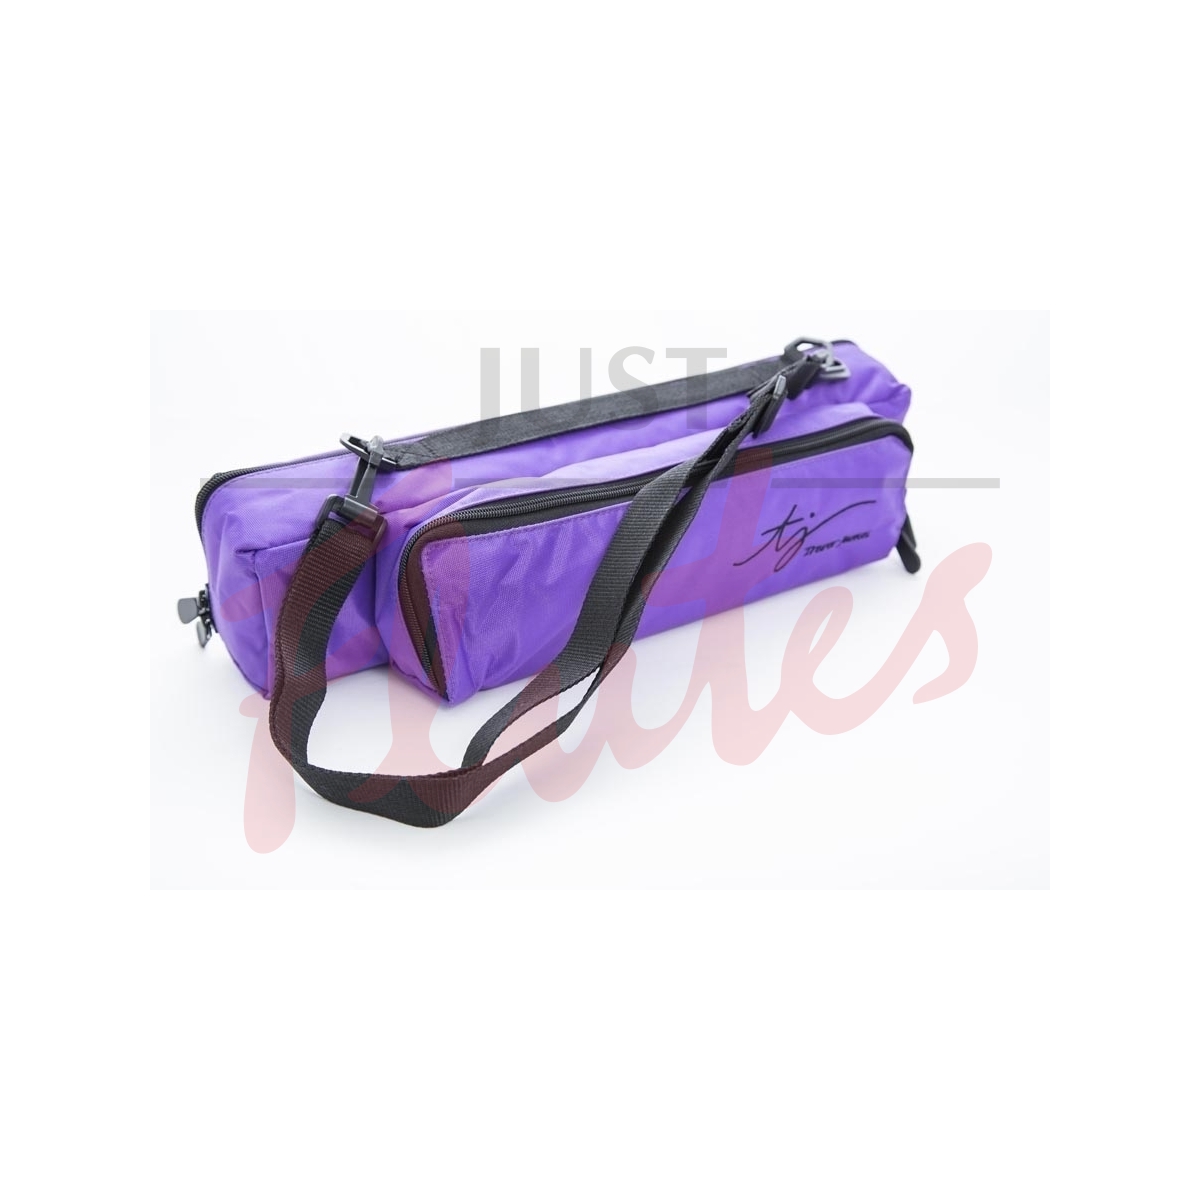 Trevor James 3509PU Flute and Piccolo Piggyback Shoulder Bag Case Cover, Purple